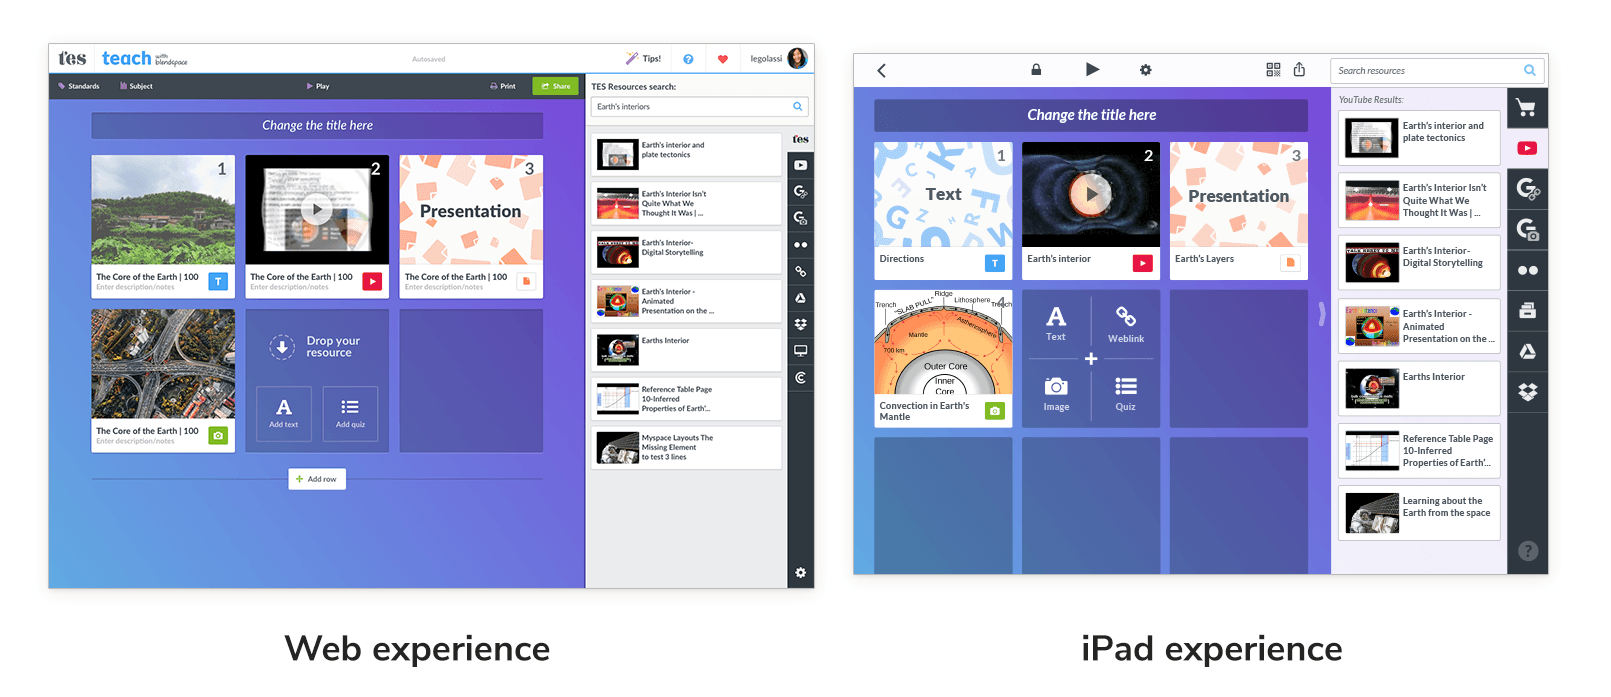 Web and iPad comparison